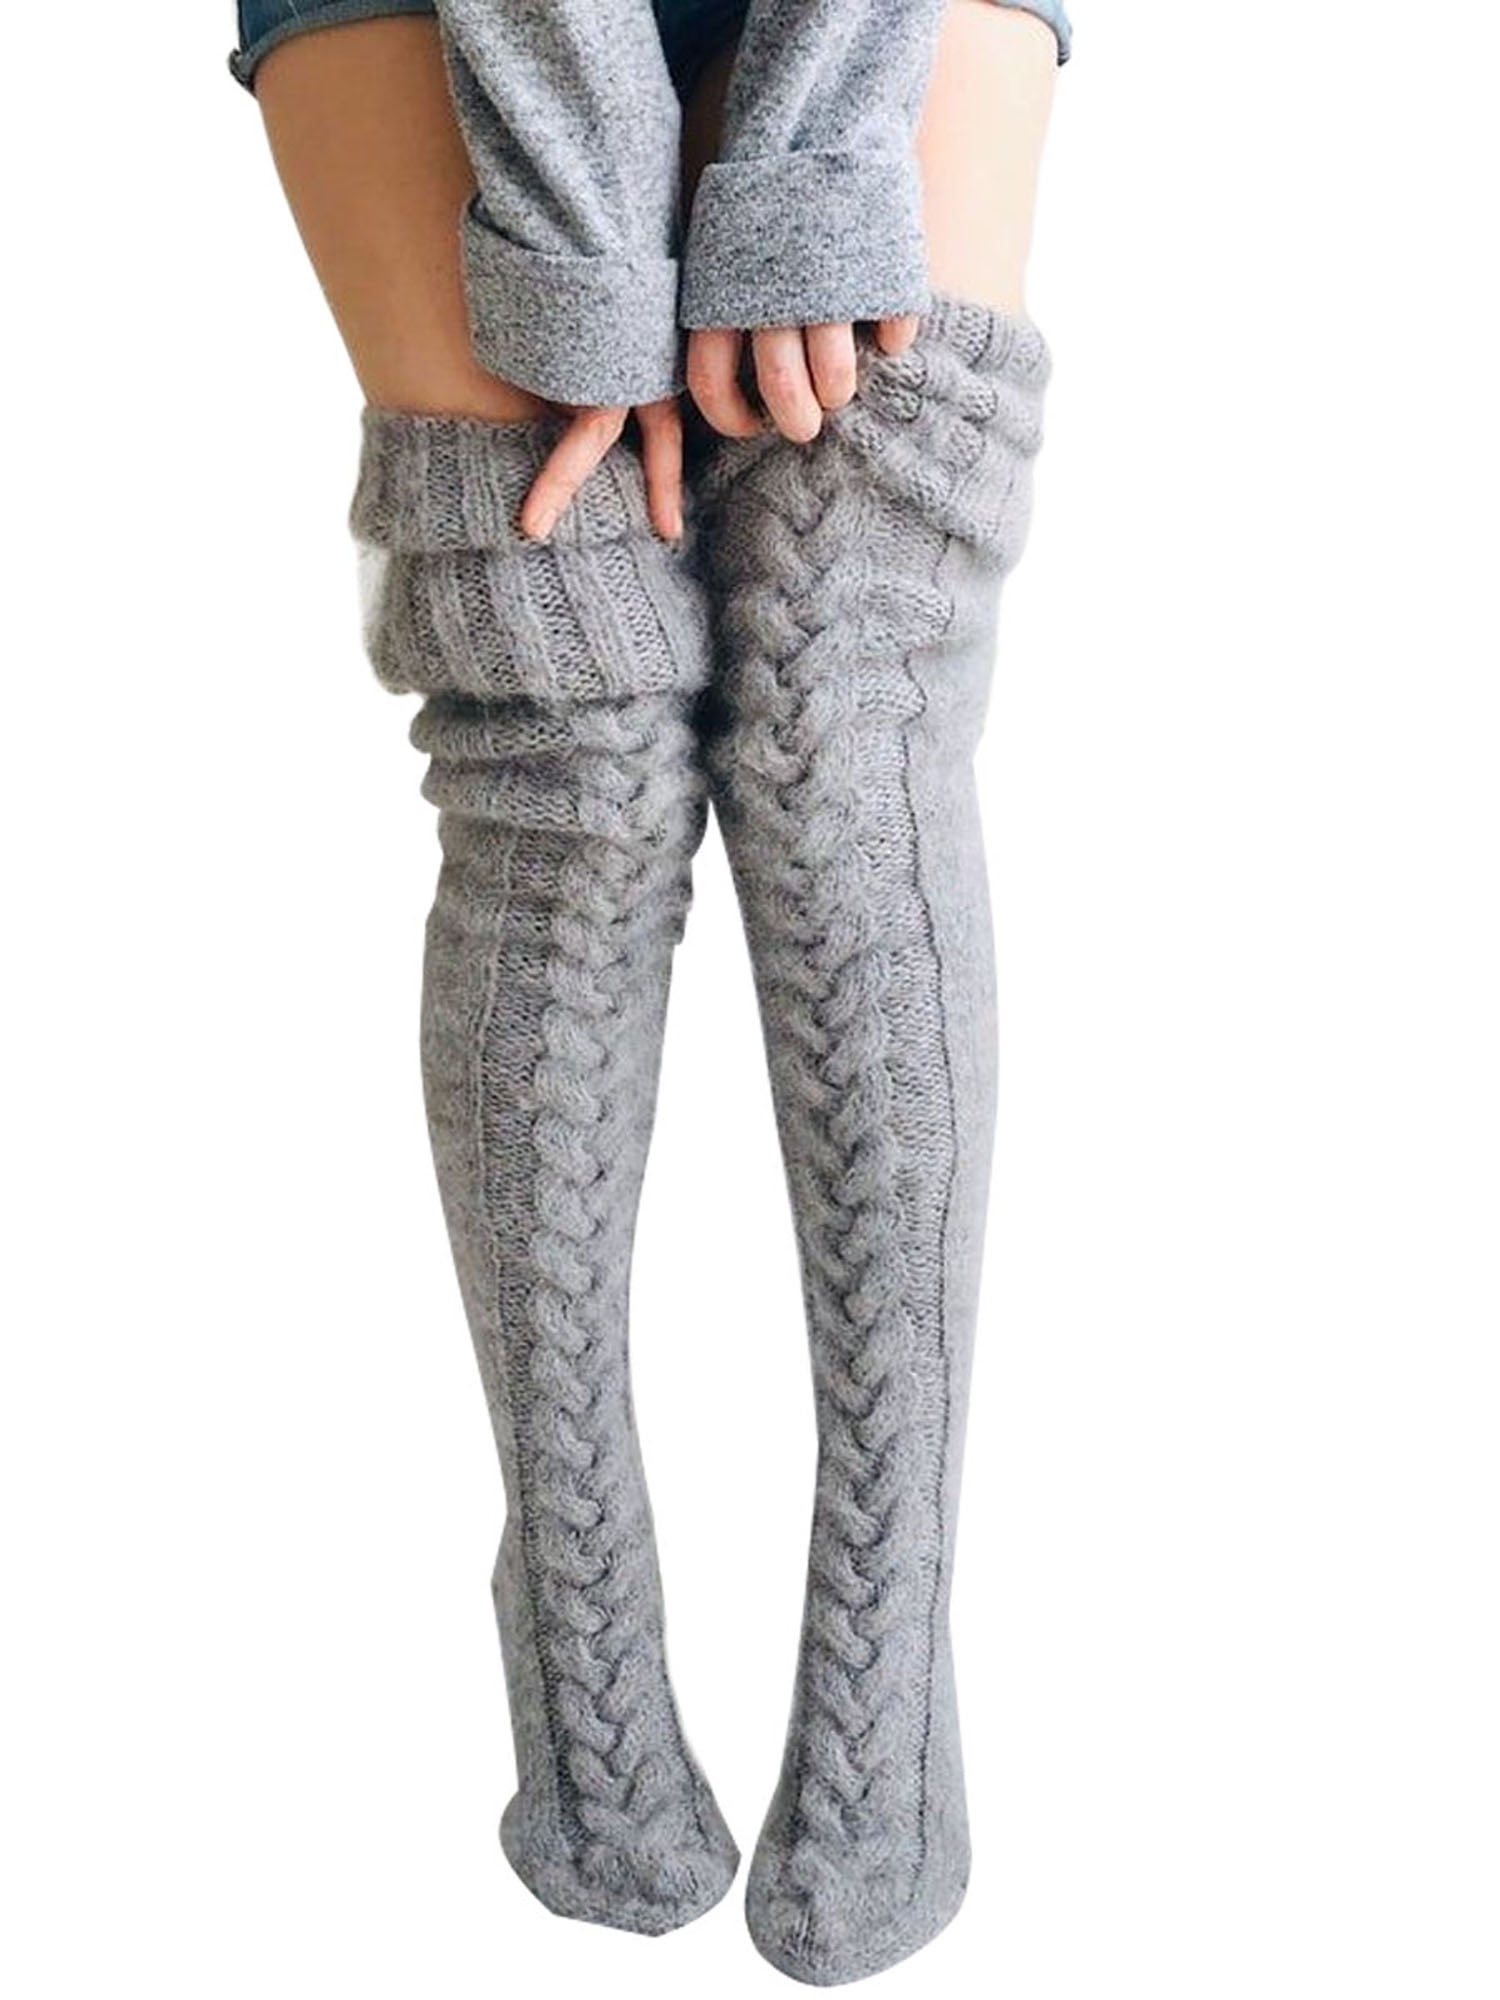 wool knit Ladies socks  Knee-high Knitted socks for women  womens socks Long